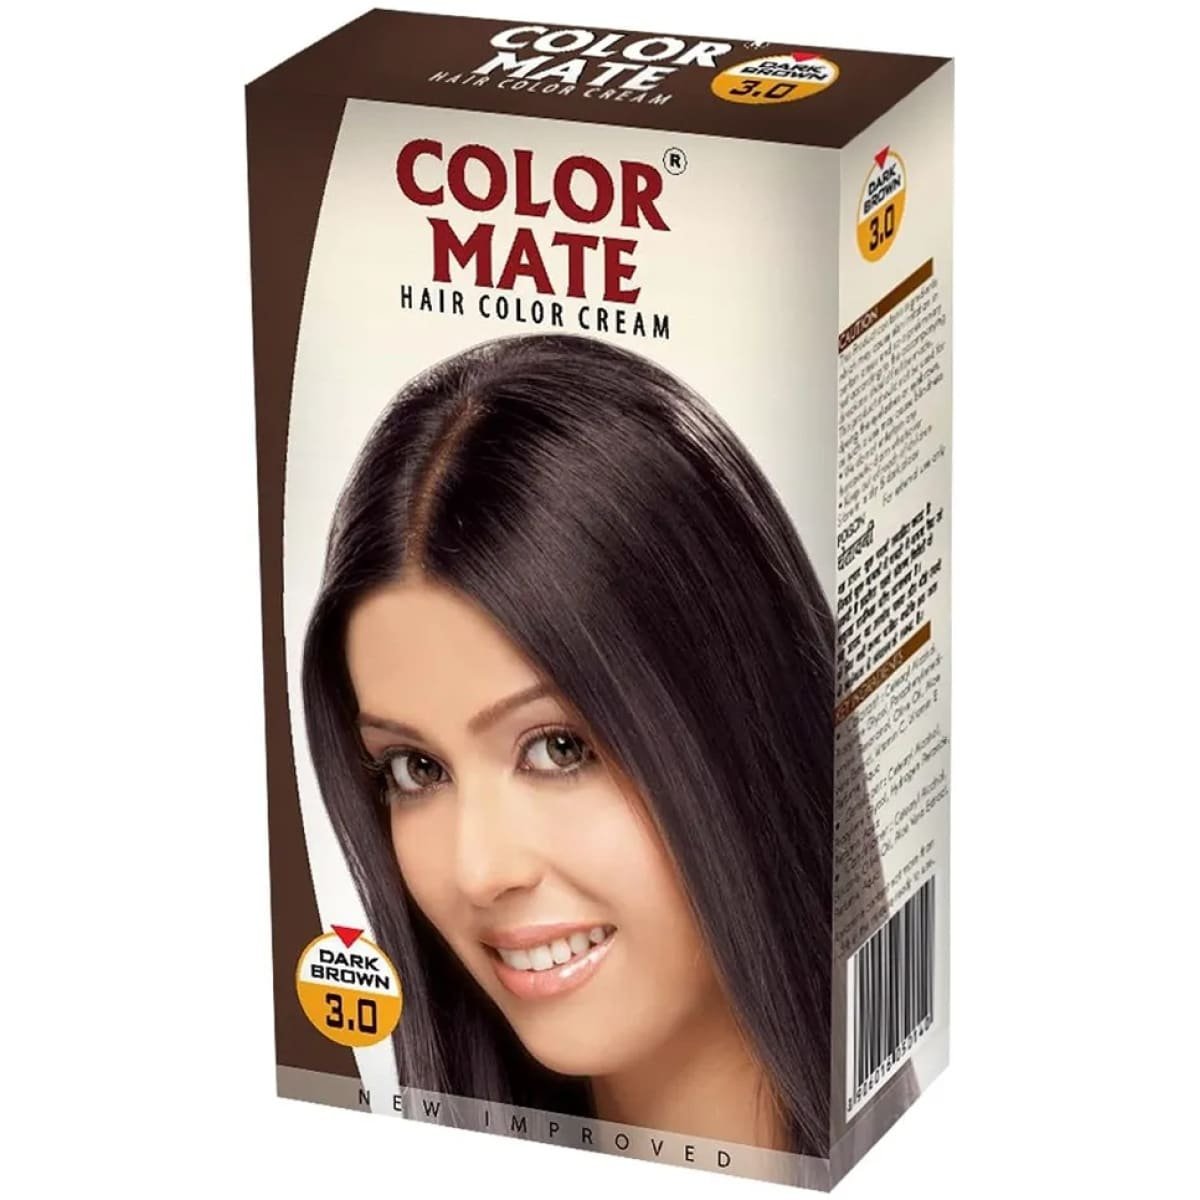 Colormate Hair Color Cream 3.0 Dark Brown